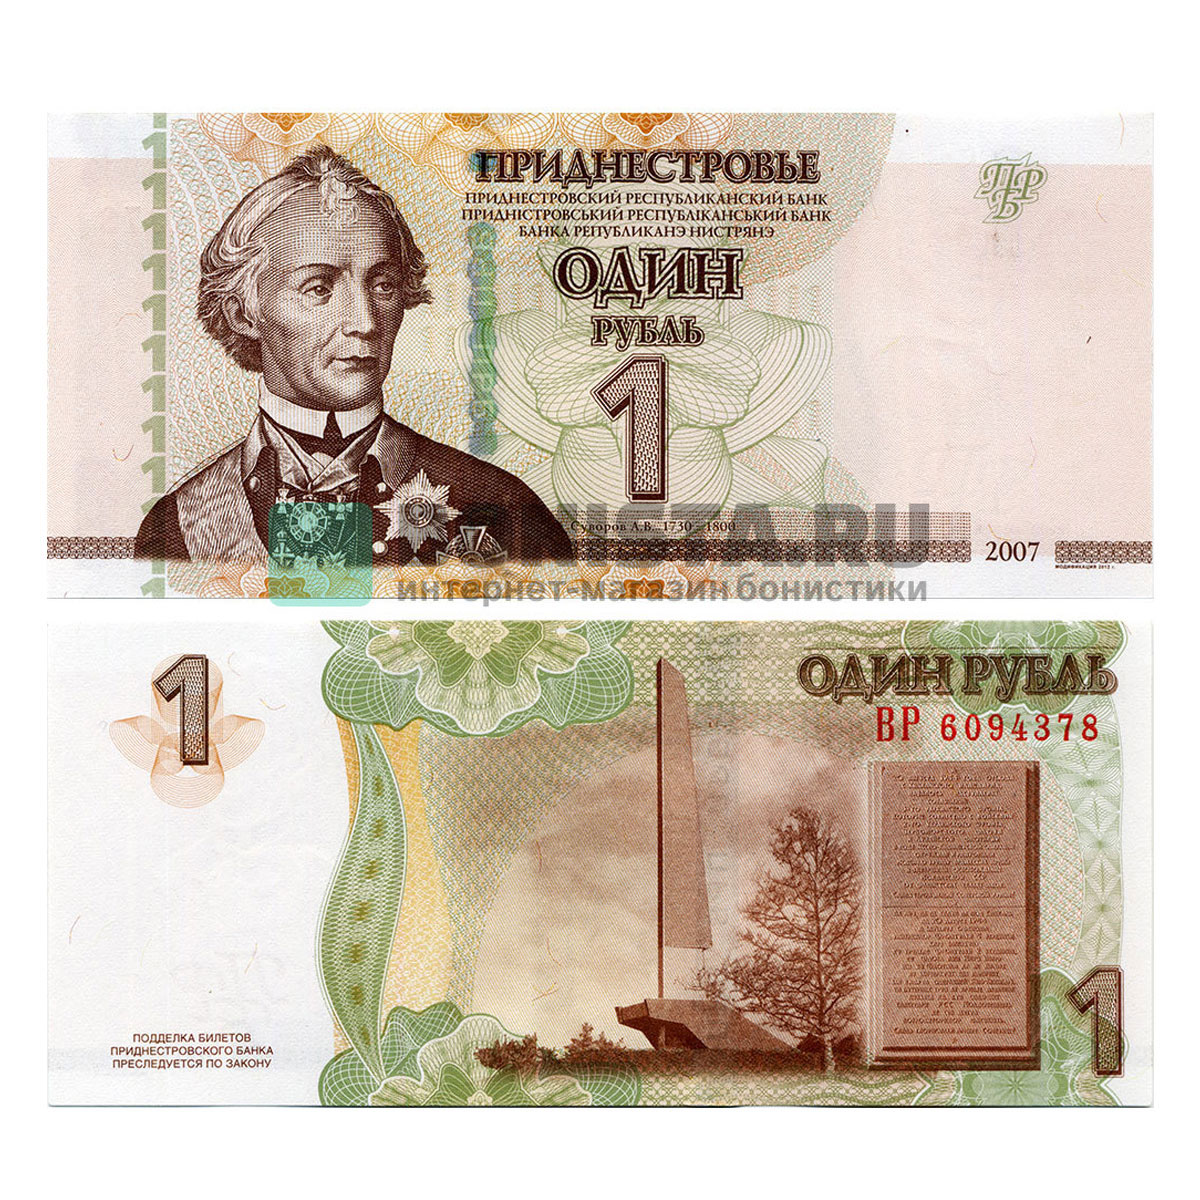 Transnistria 1 ruble 100 Notes UNC Banknotes Bundle Brick 2007